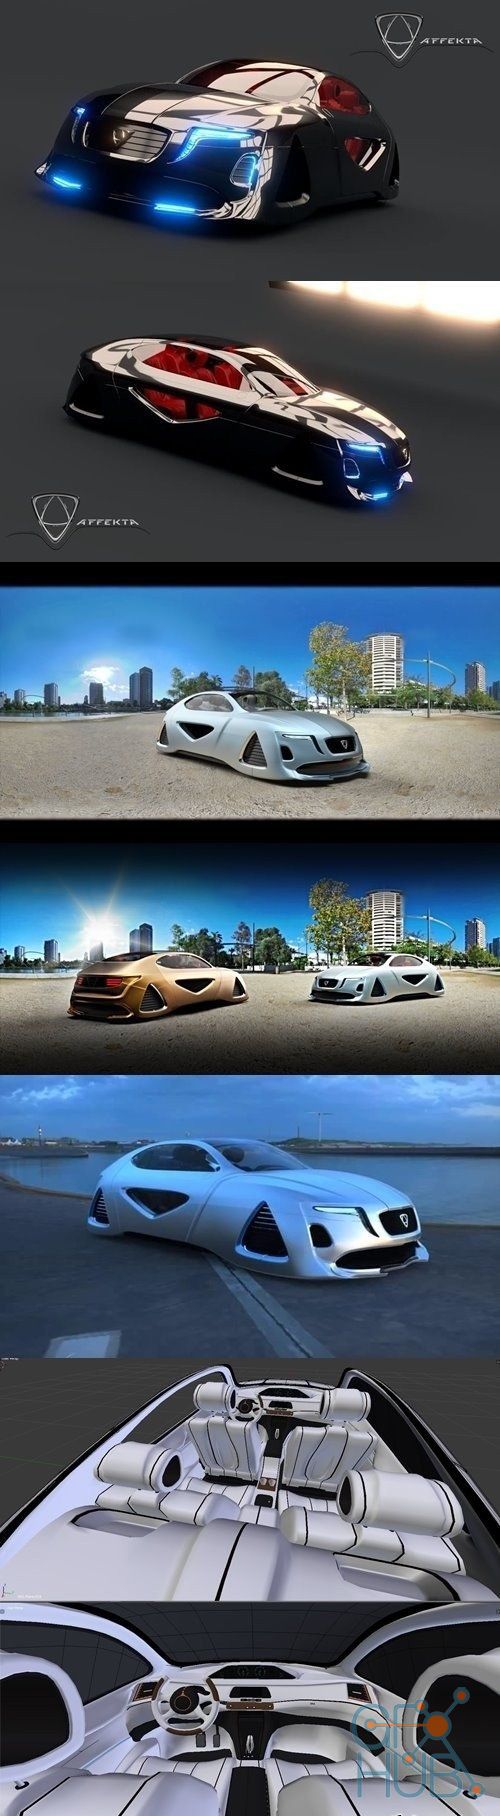 Affekta X-Fusion Sci-Fi Concept Car